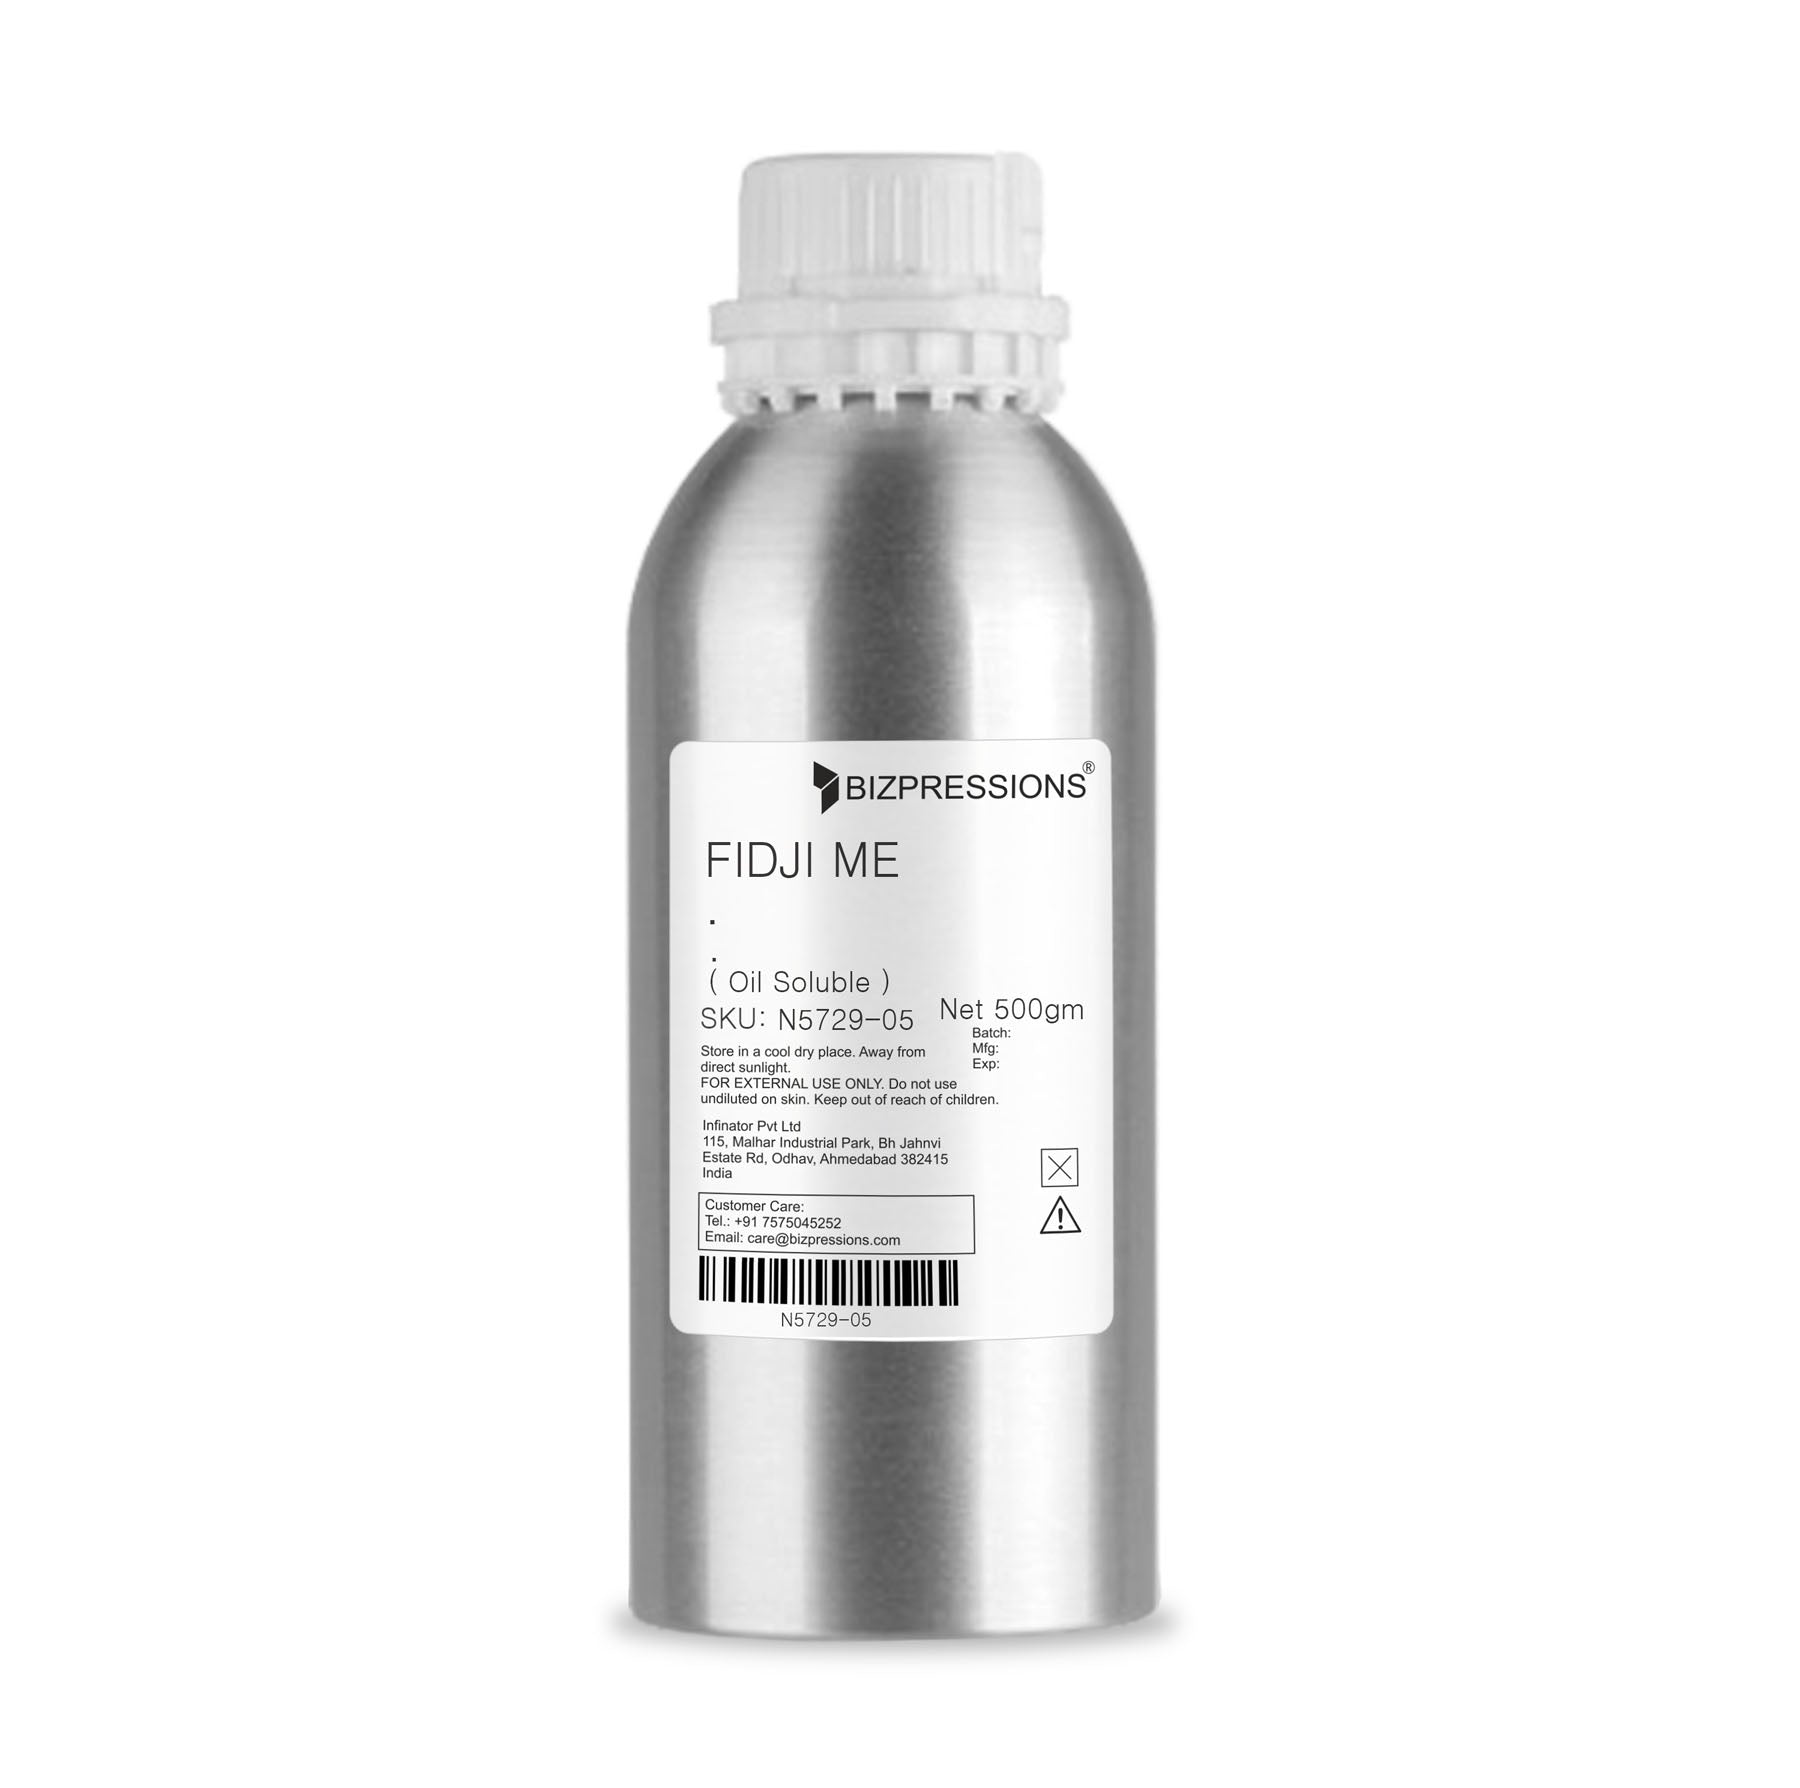 FIDJI ME - Fragrance ( Oil Soluble ) - 500 gm